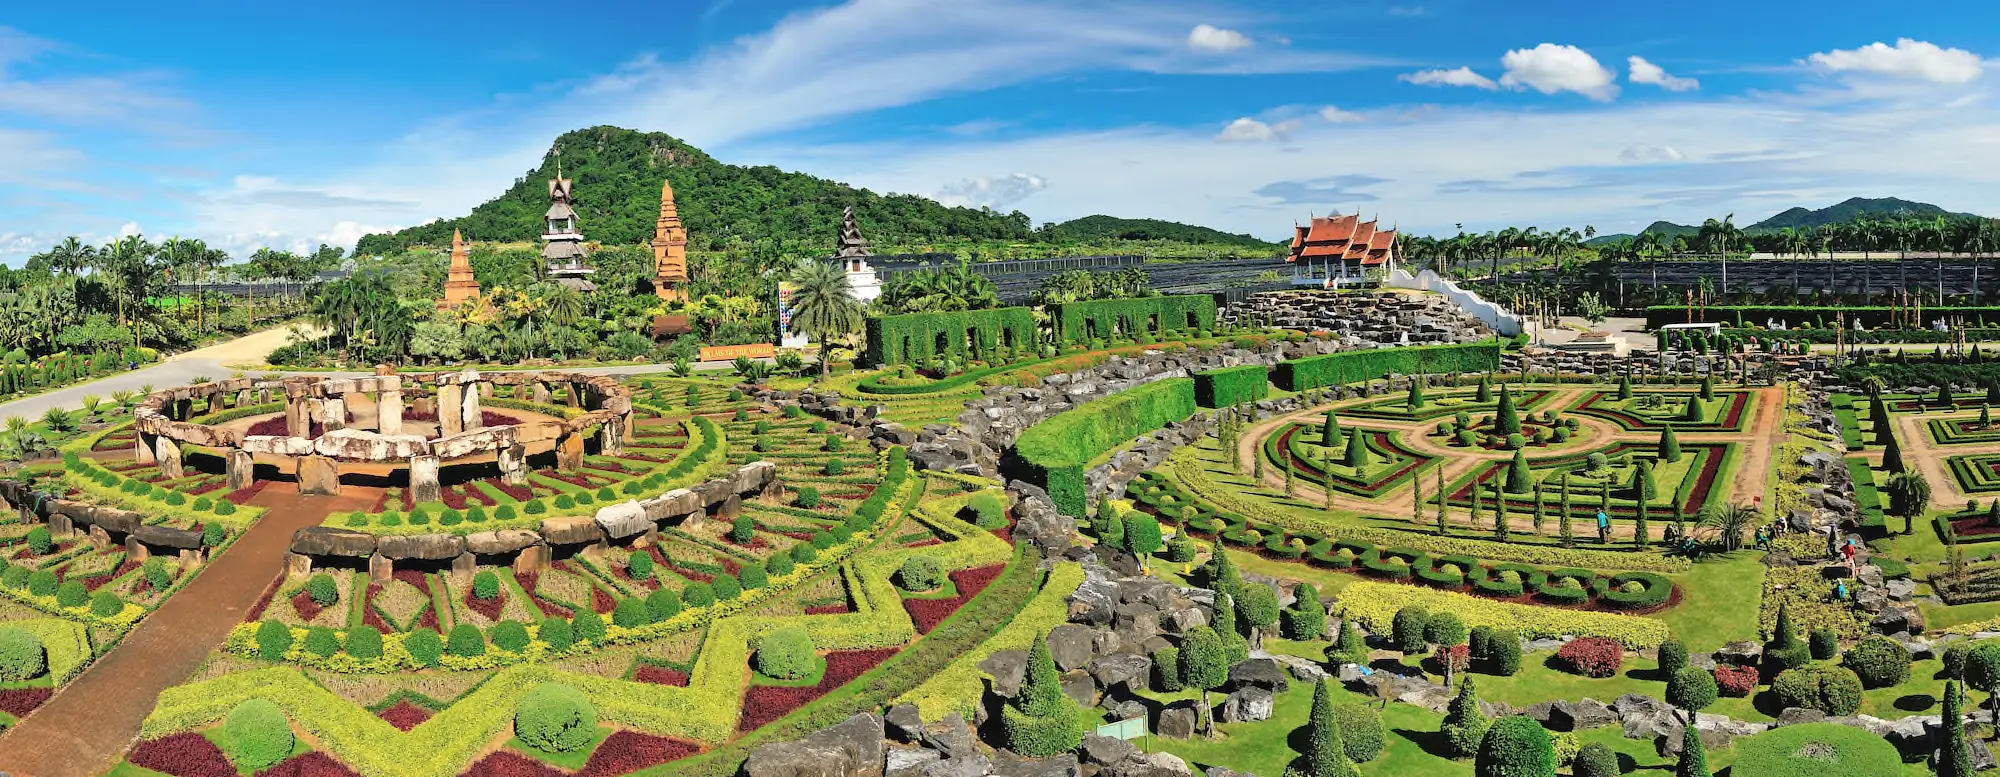 Pattaya "Nong Nooch Garden" - Thailand Copyright © AdobeStock 52428339 think4photop